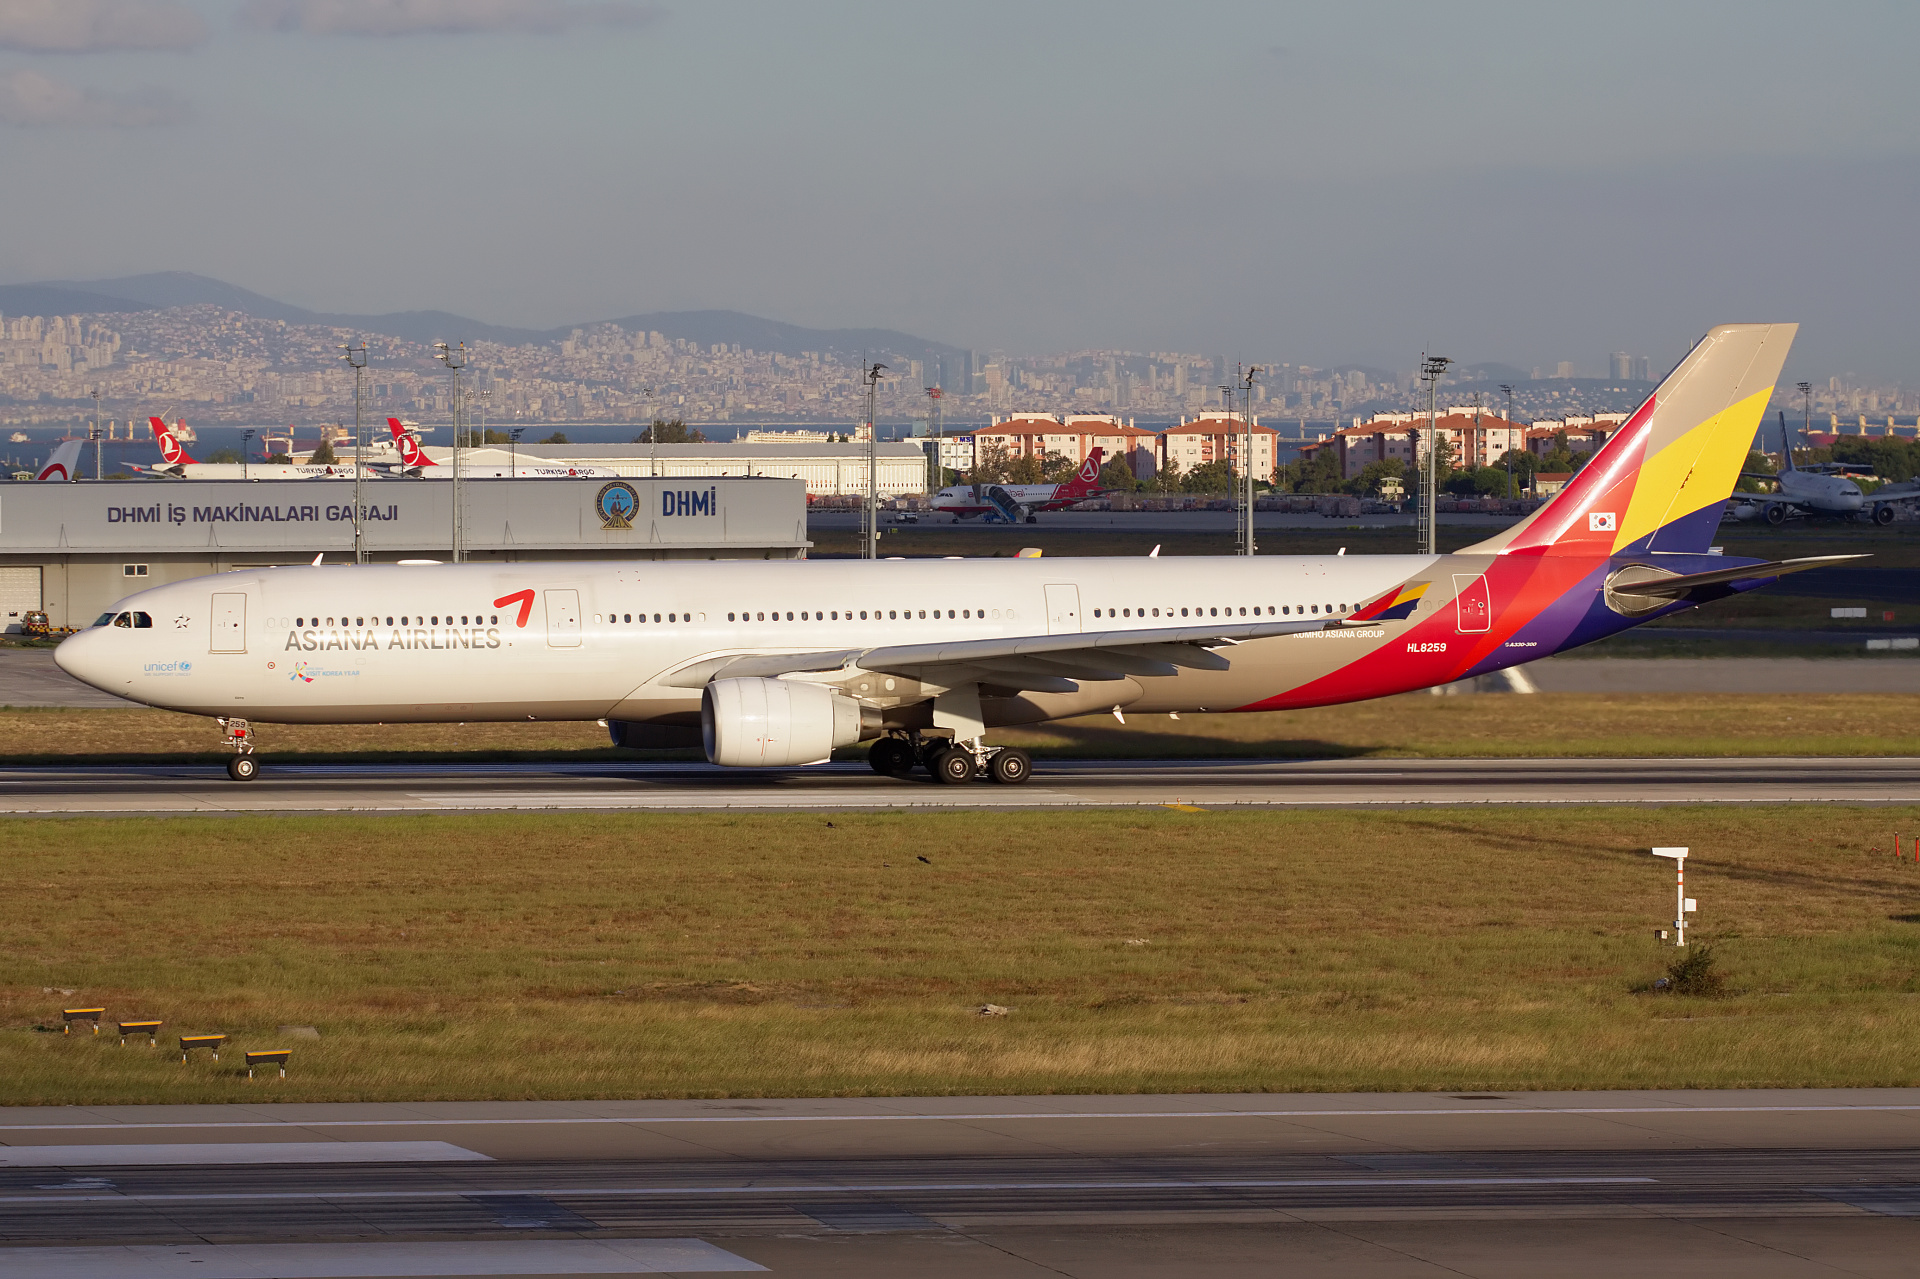 HL8259, Asiana Airlines (Samoloty » Port Lotniczy im. Atatürka w Stambule » Airbus A330-300)